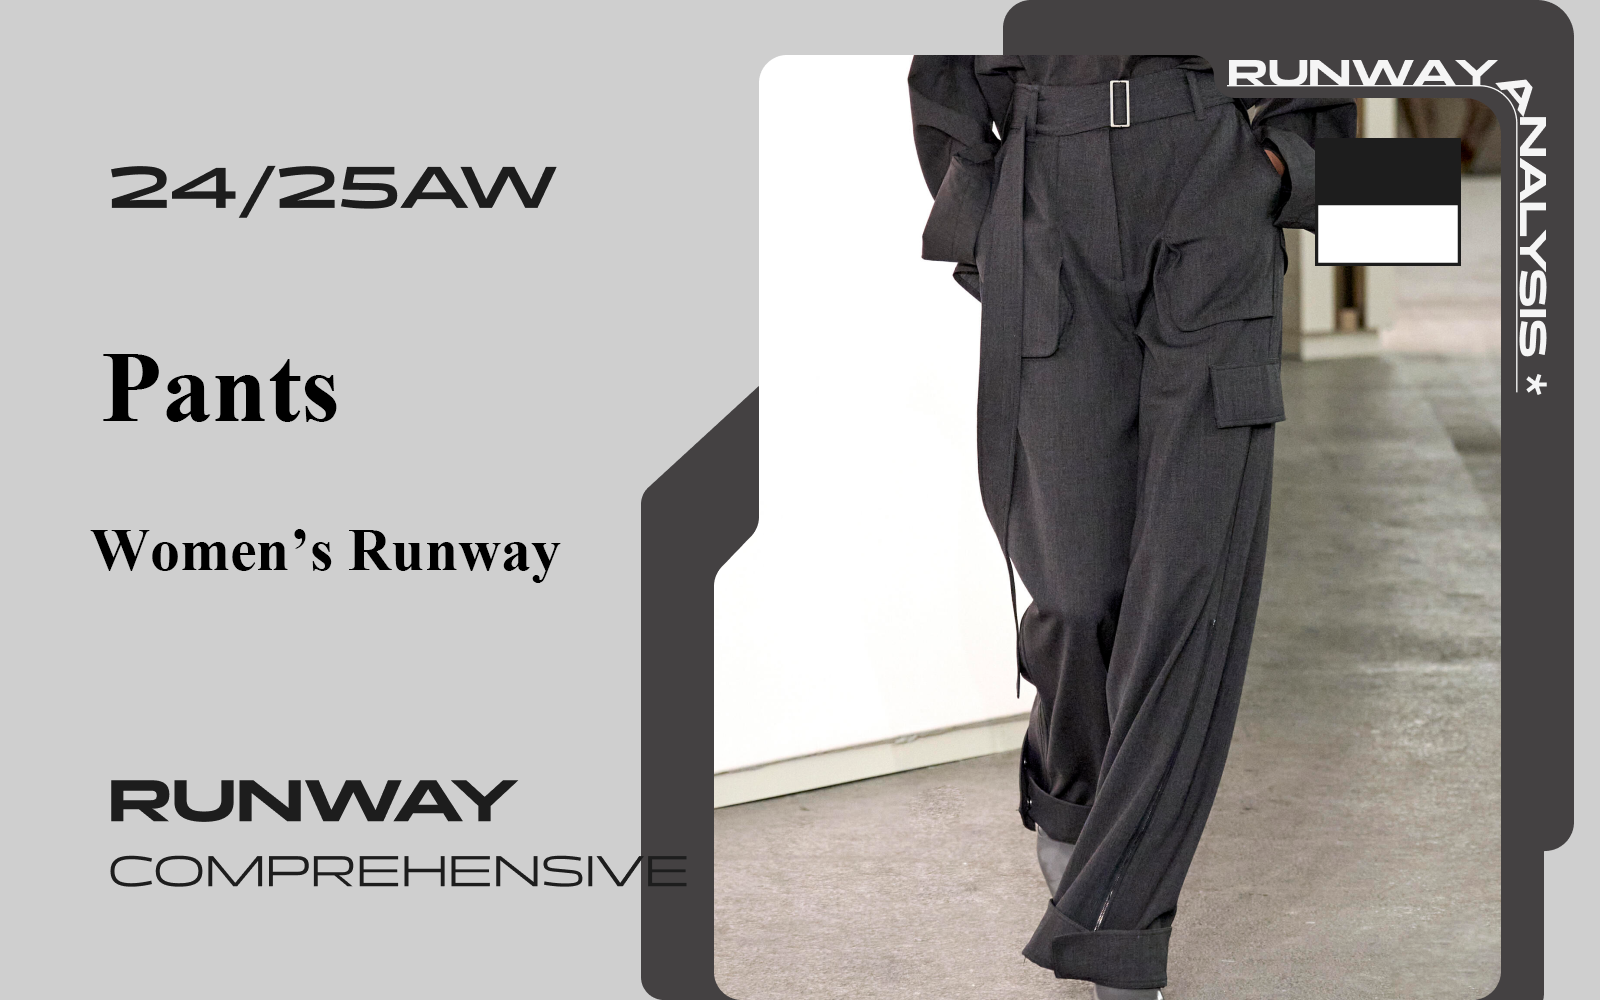 Pants -- A/W 24/25 Comprehensive Analysis of Women's Runway